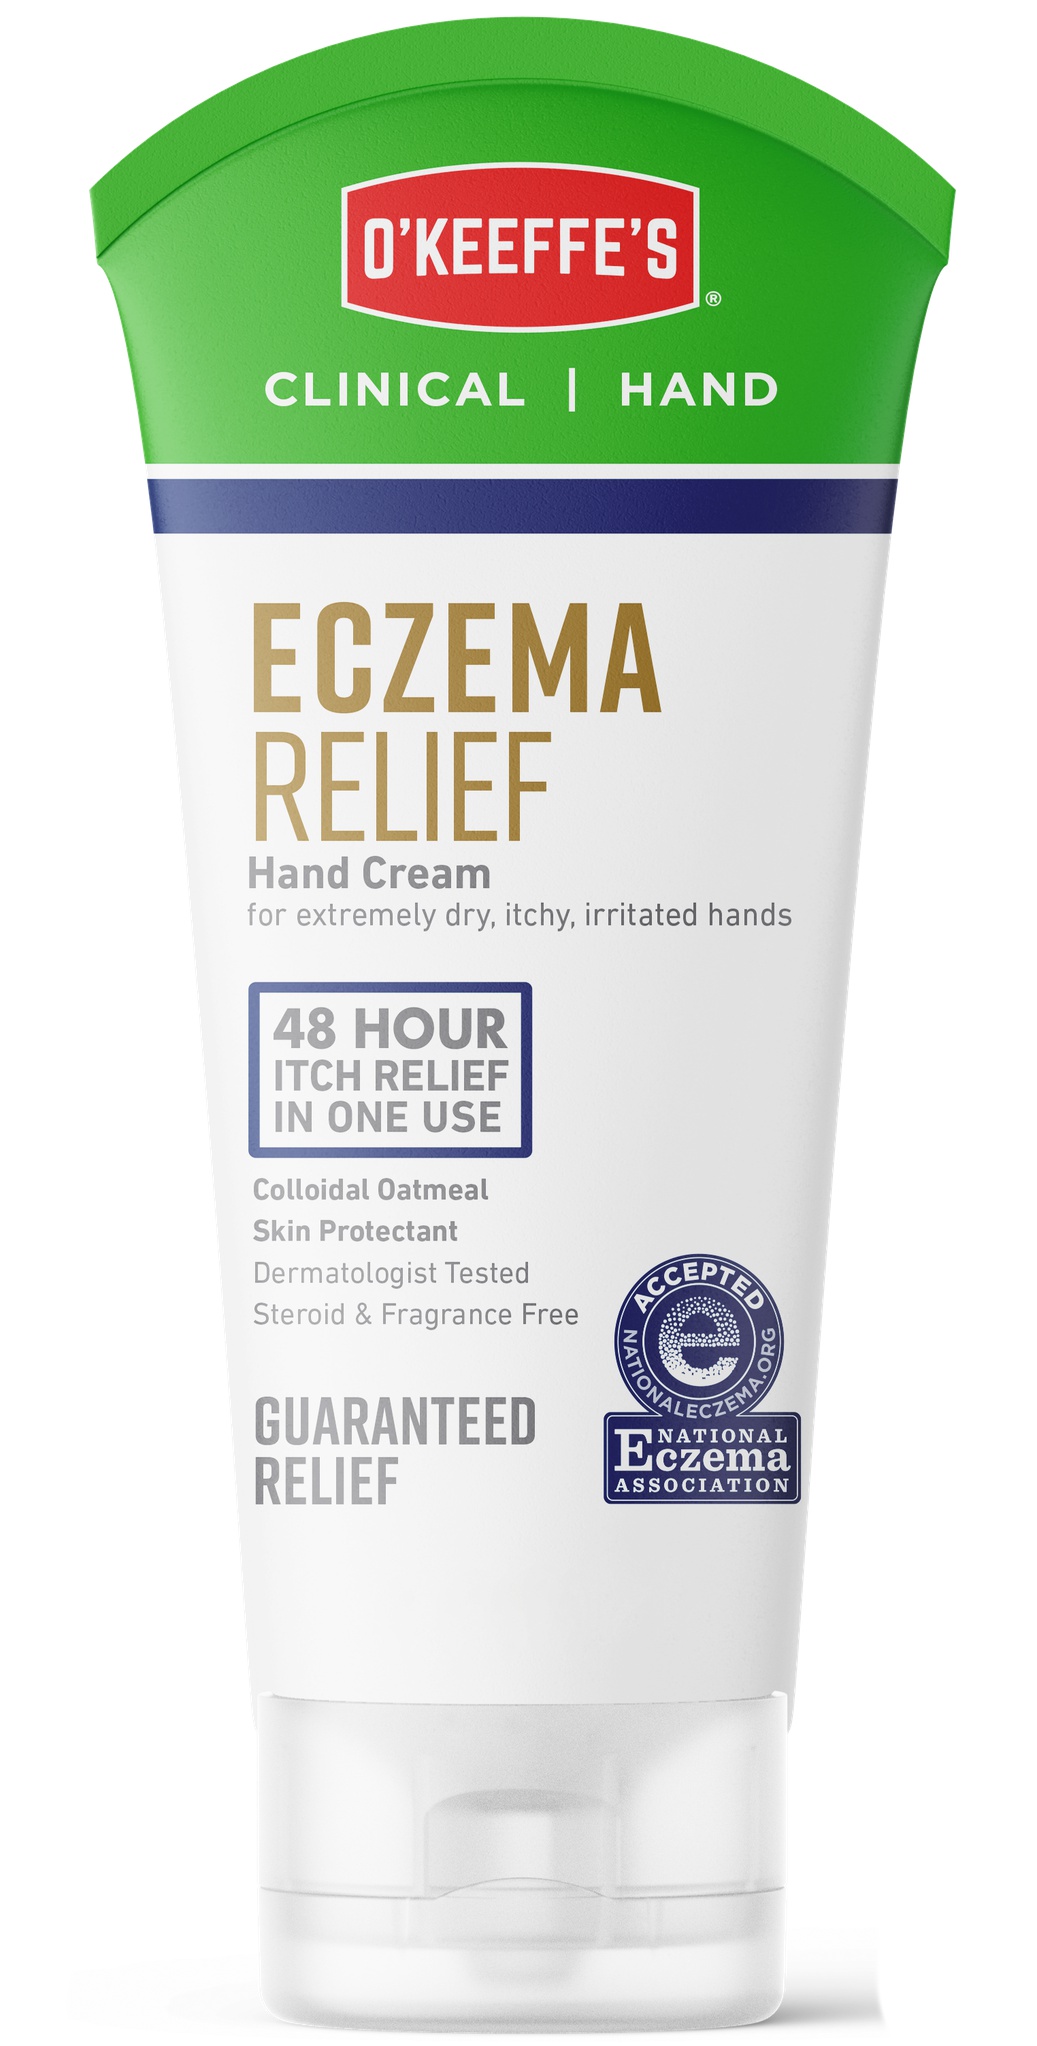 O’Keeffe’s Eczema Relief Hand Cream